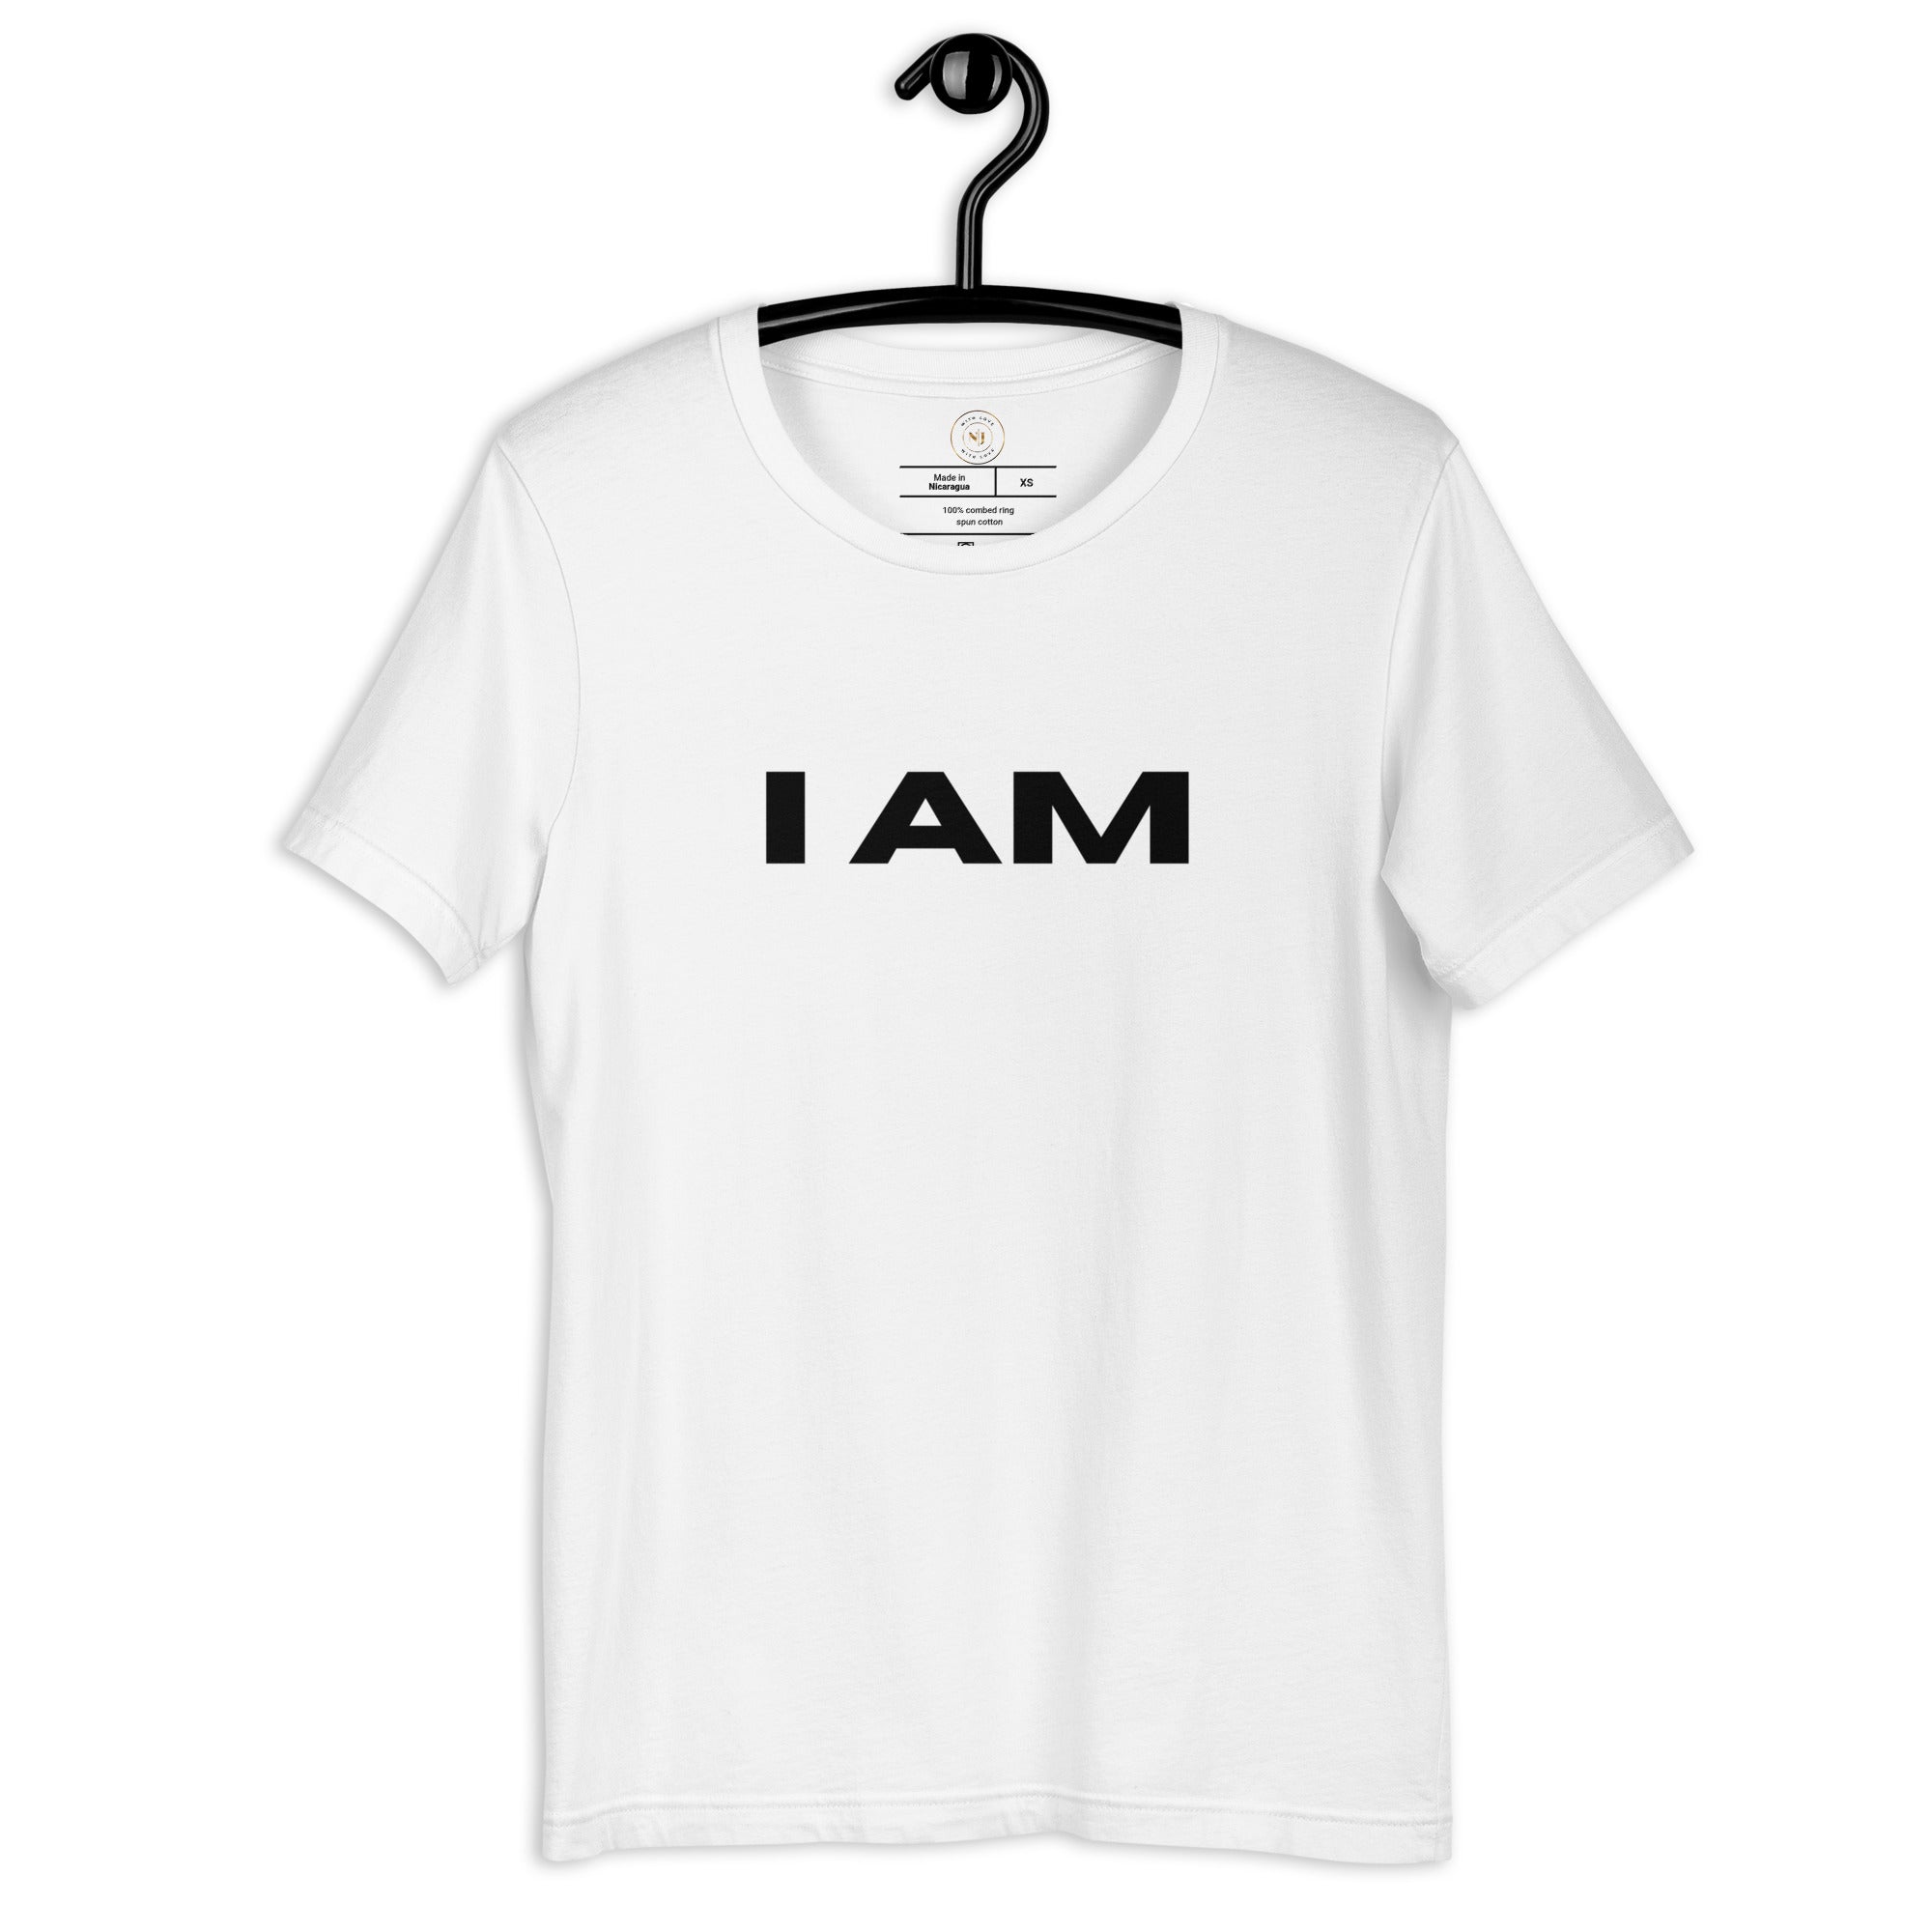 "I AM" POSITIVE AFFIRMATION T-SHIRT